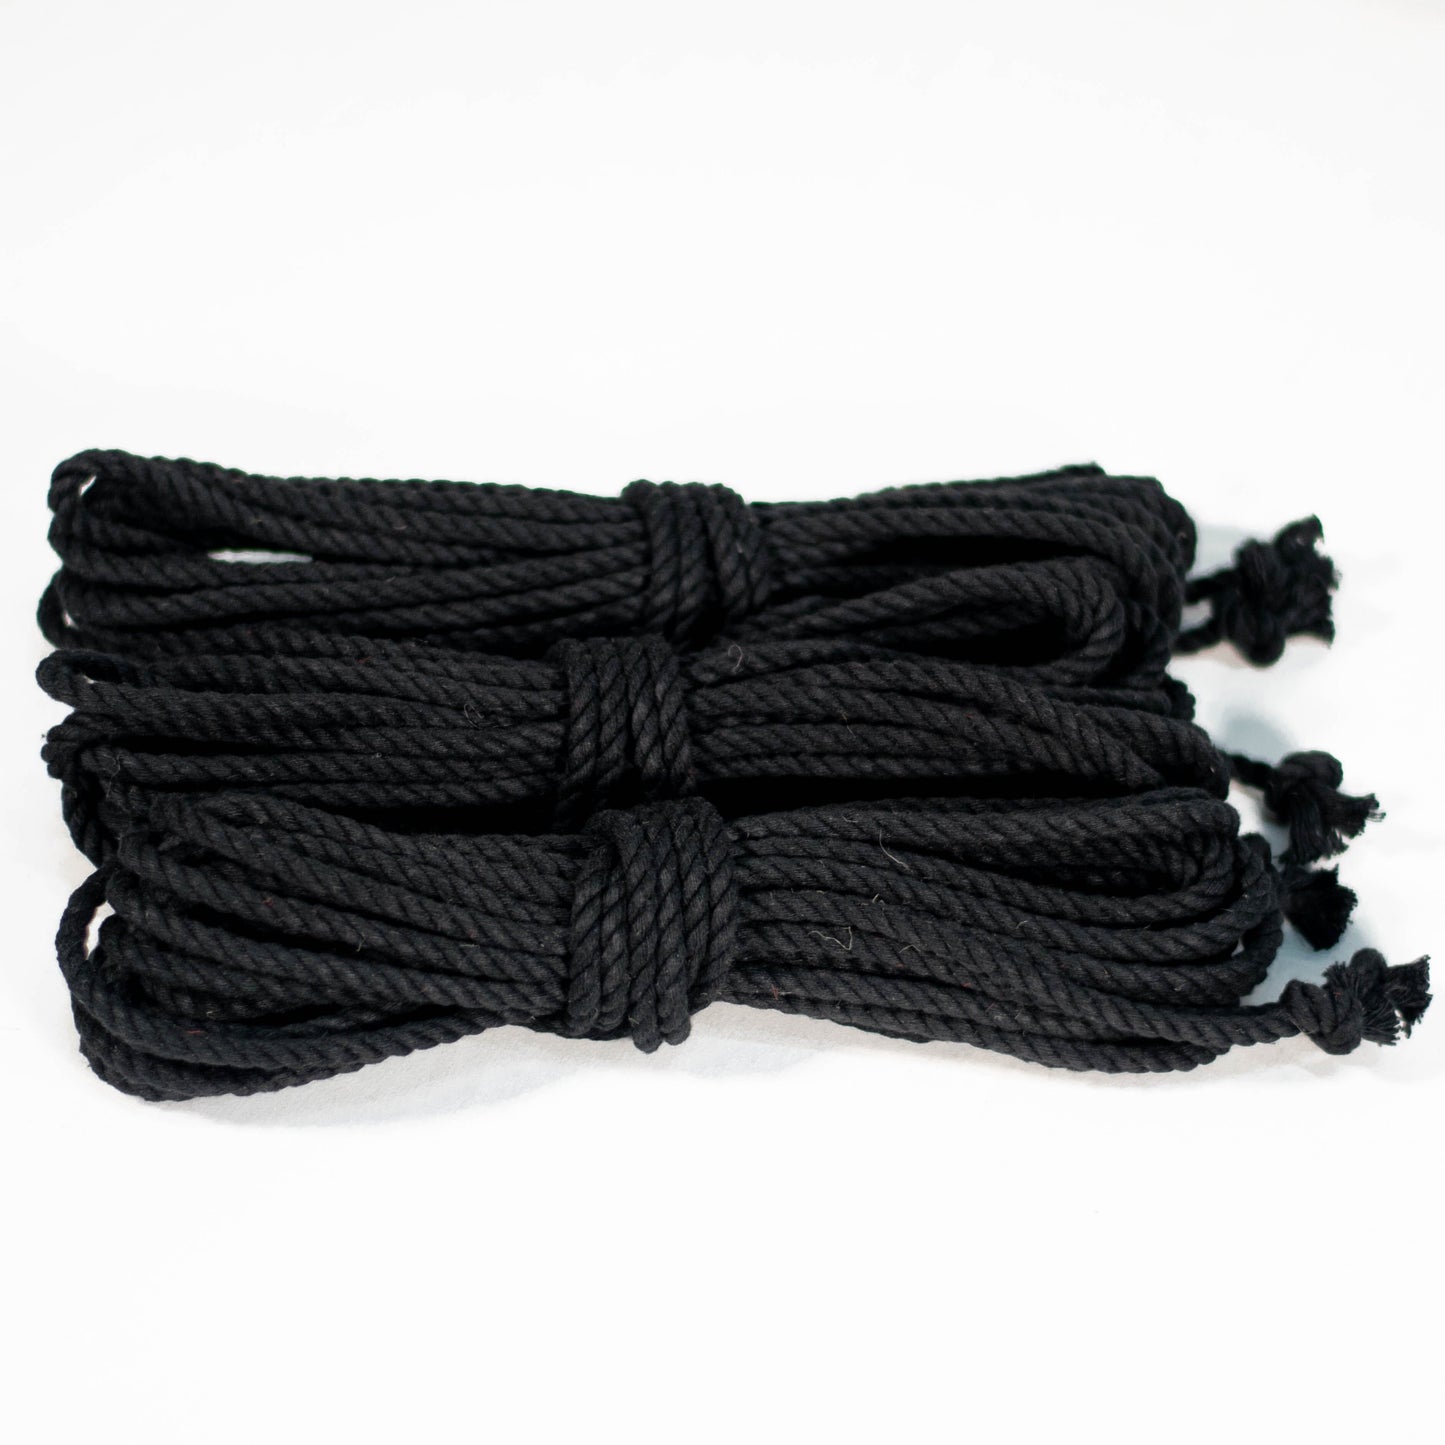 Cotton Play Ropes Shibari Rope black Bundle of 3 